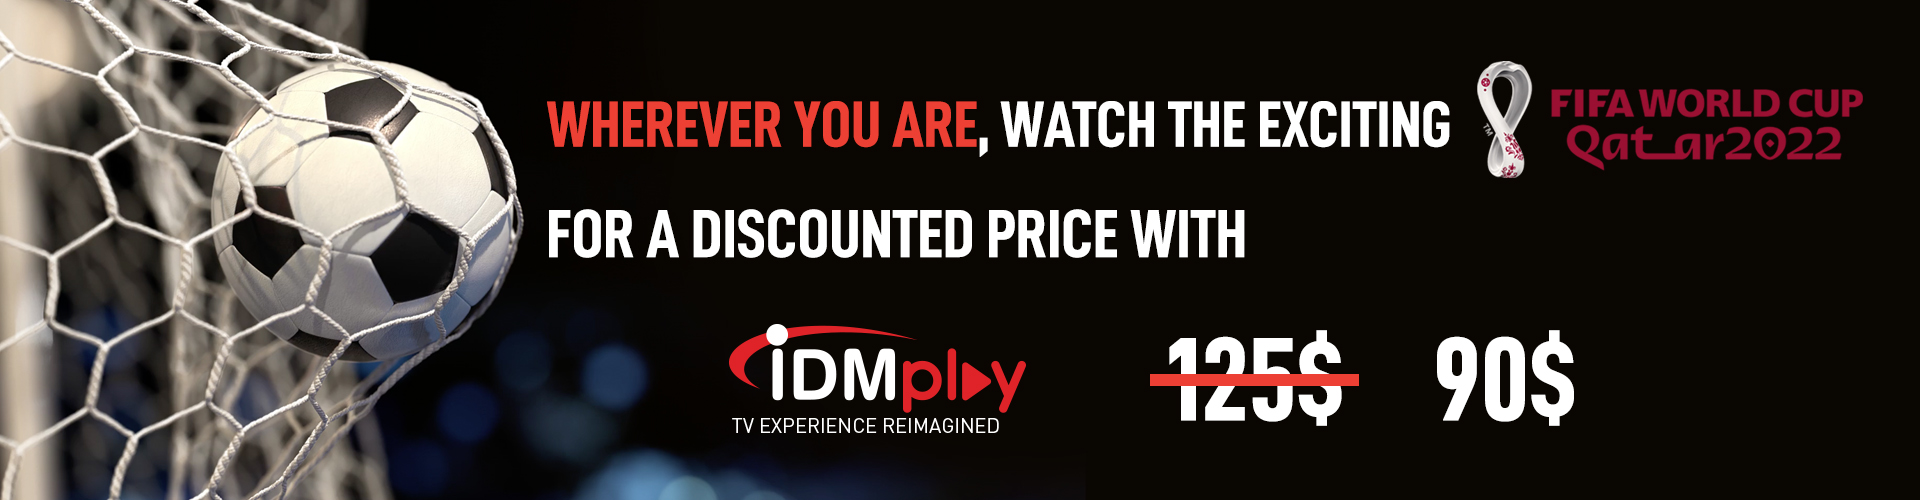 IDM new price list